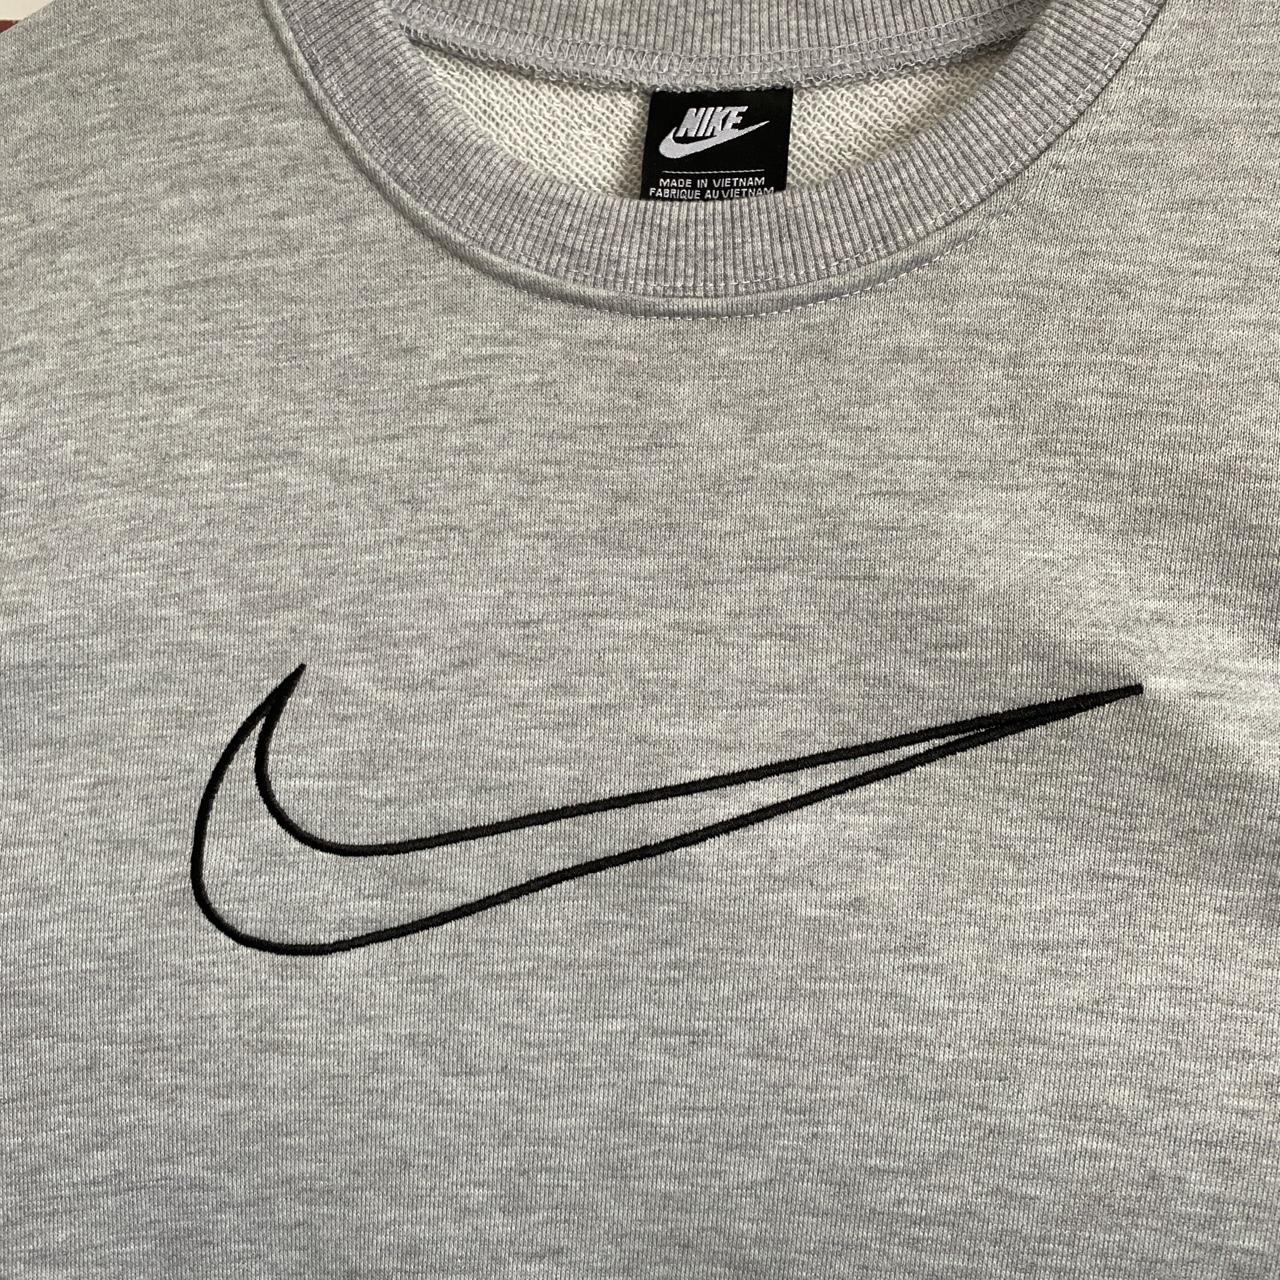 Vintage grey Nike tick sweatshirt No size but fits... - Depop